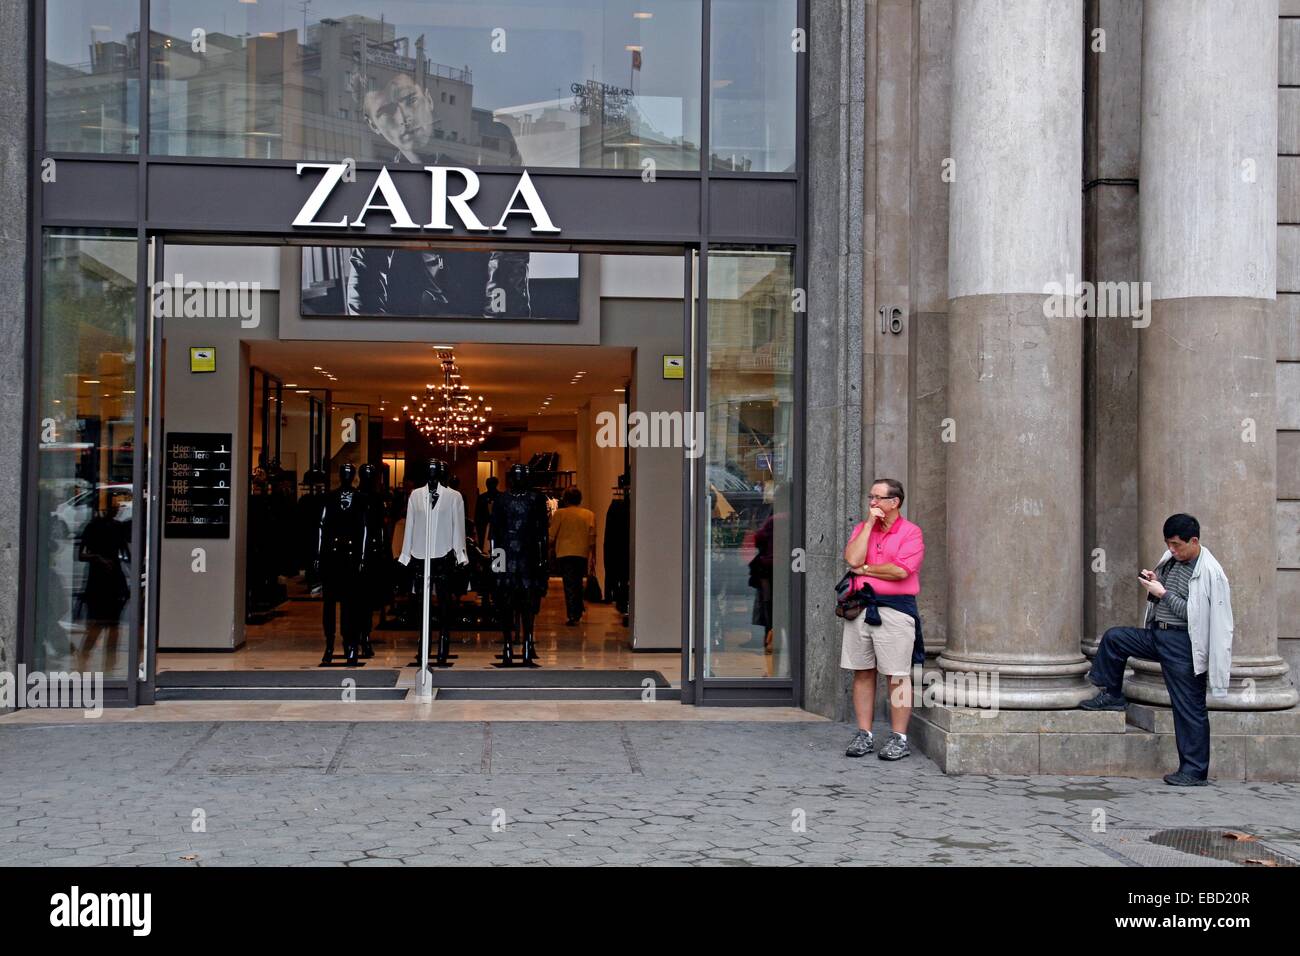 Zara shop, Barcelona, Catalonia, Spain Stock Photo - Alamy